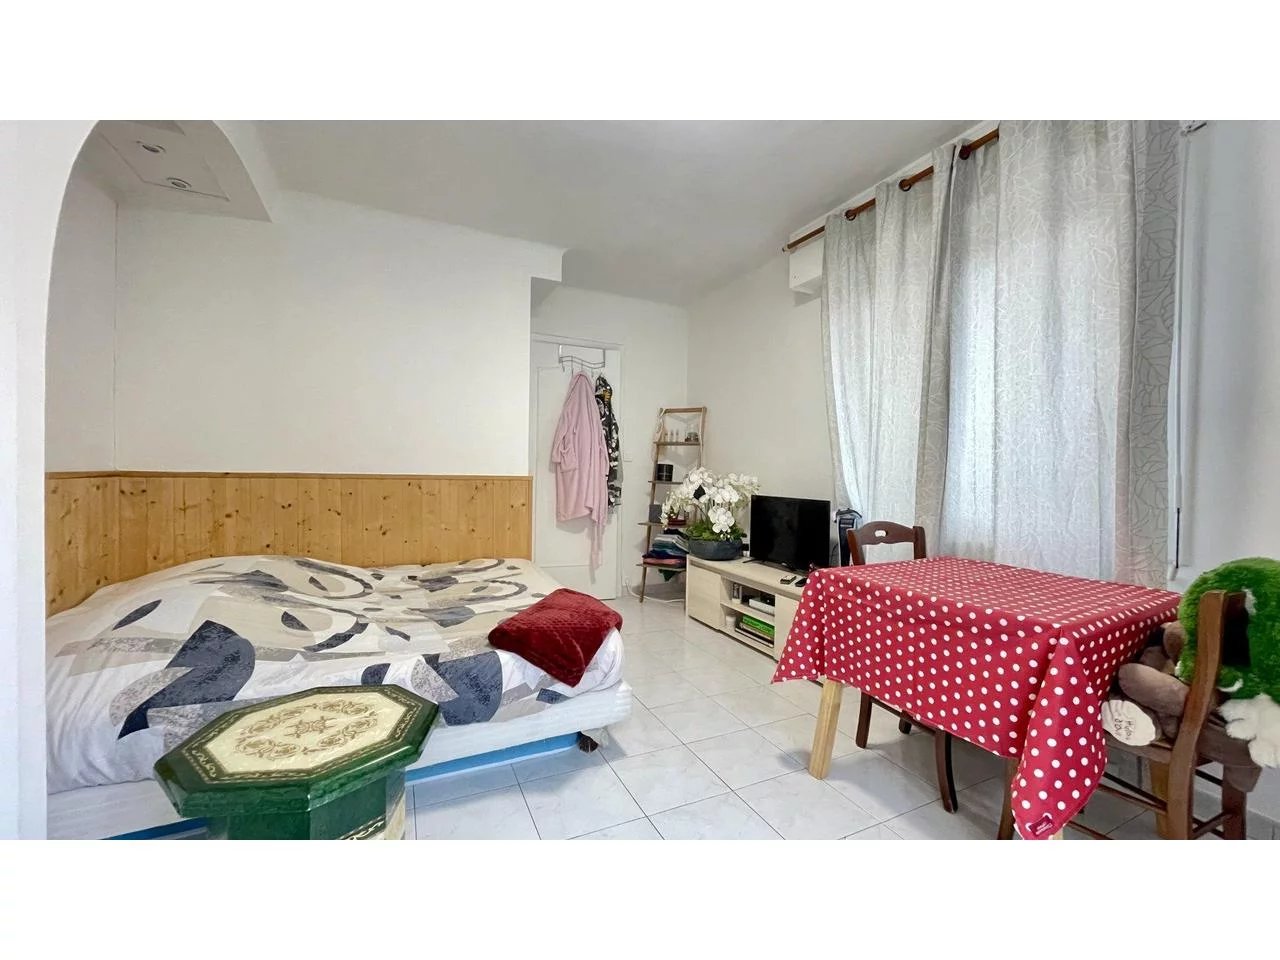 Appartement  1 Locali 23.5m2  In vendita   135 000 €